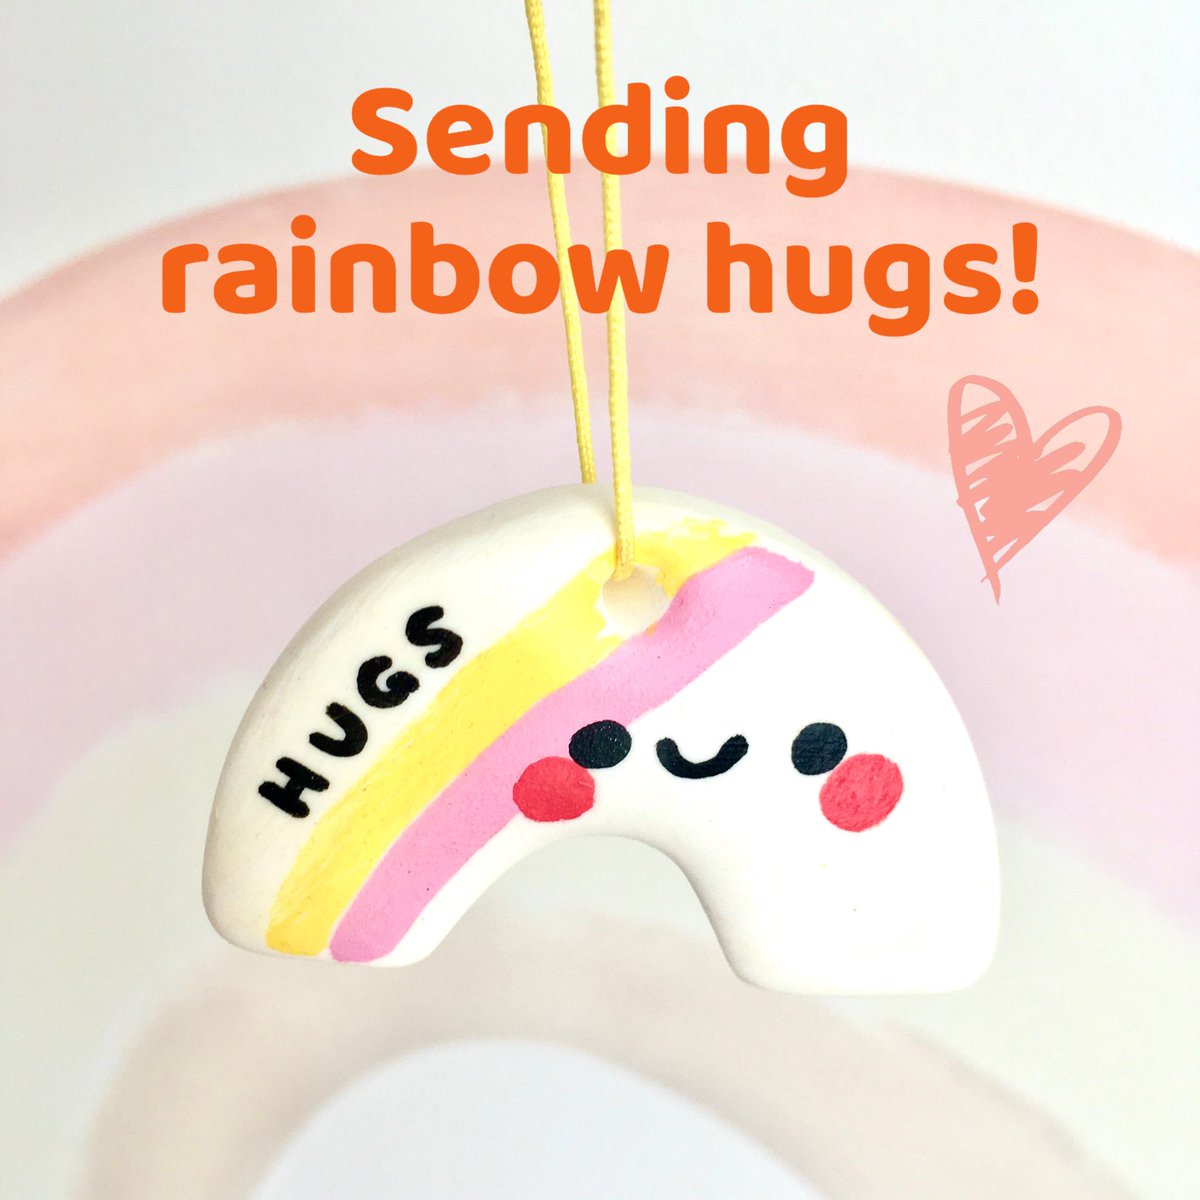 Morning! Wishing everyone a happy #Sunday , with Rainbow Hugs! I love hand painting these cute #ceramic hanging  #rainbows ! x🌈❤️

#UKGiftAM #UKGiftHour #rainbowgift #cutegift 

etsy.com/uk/listing/802…